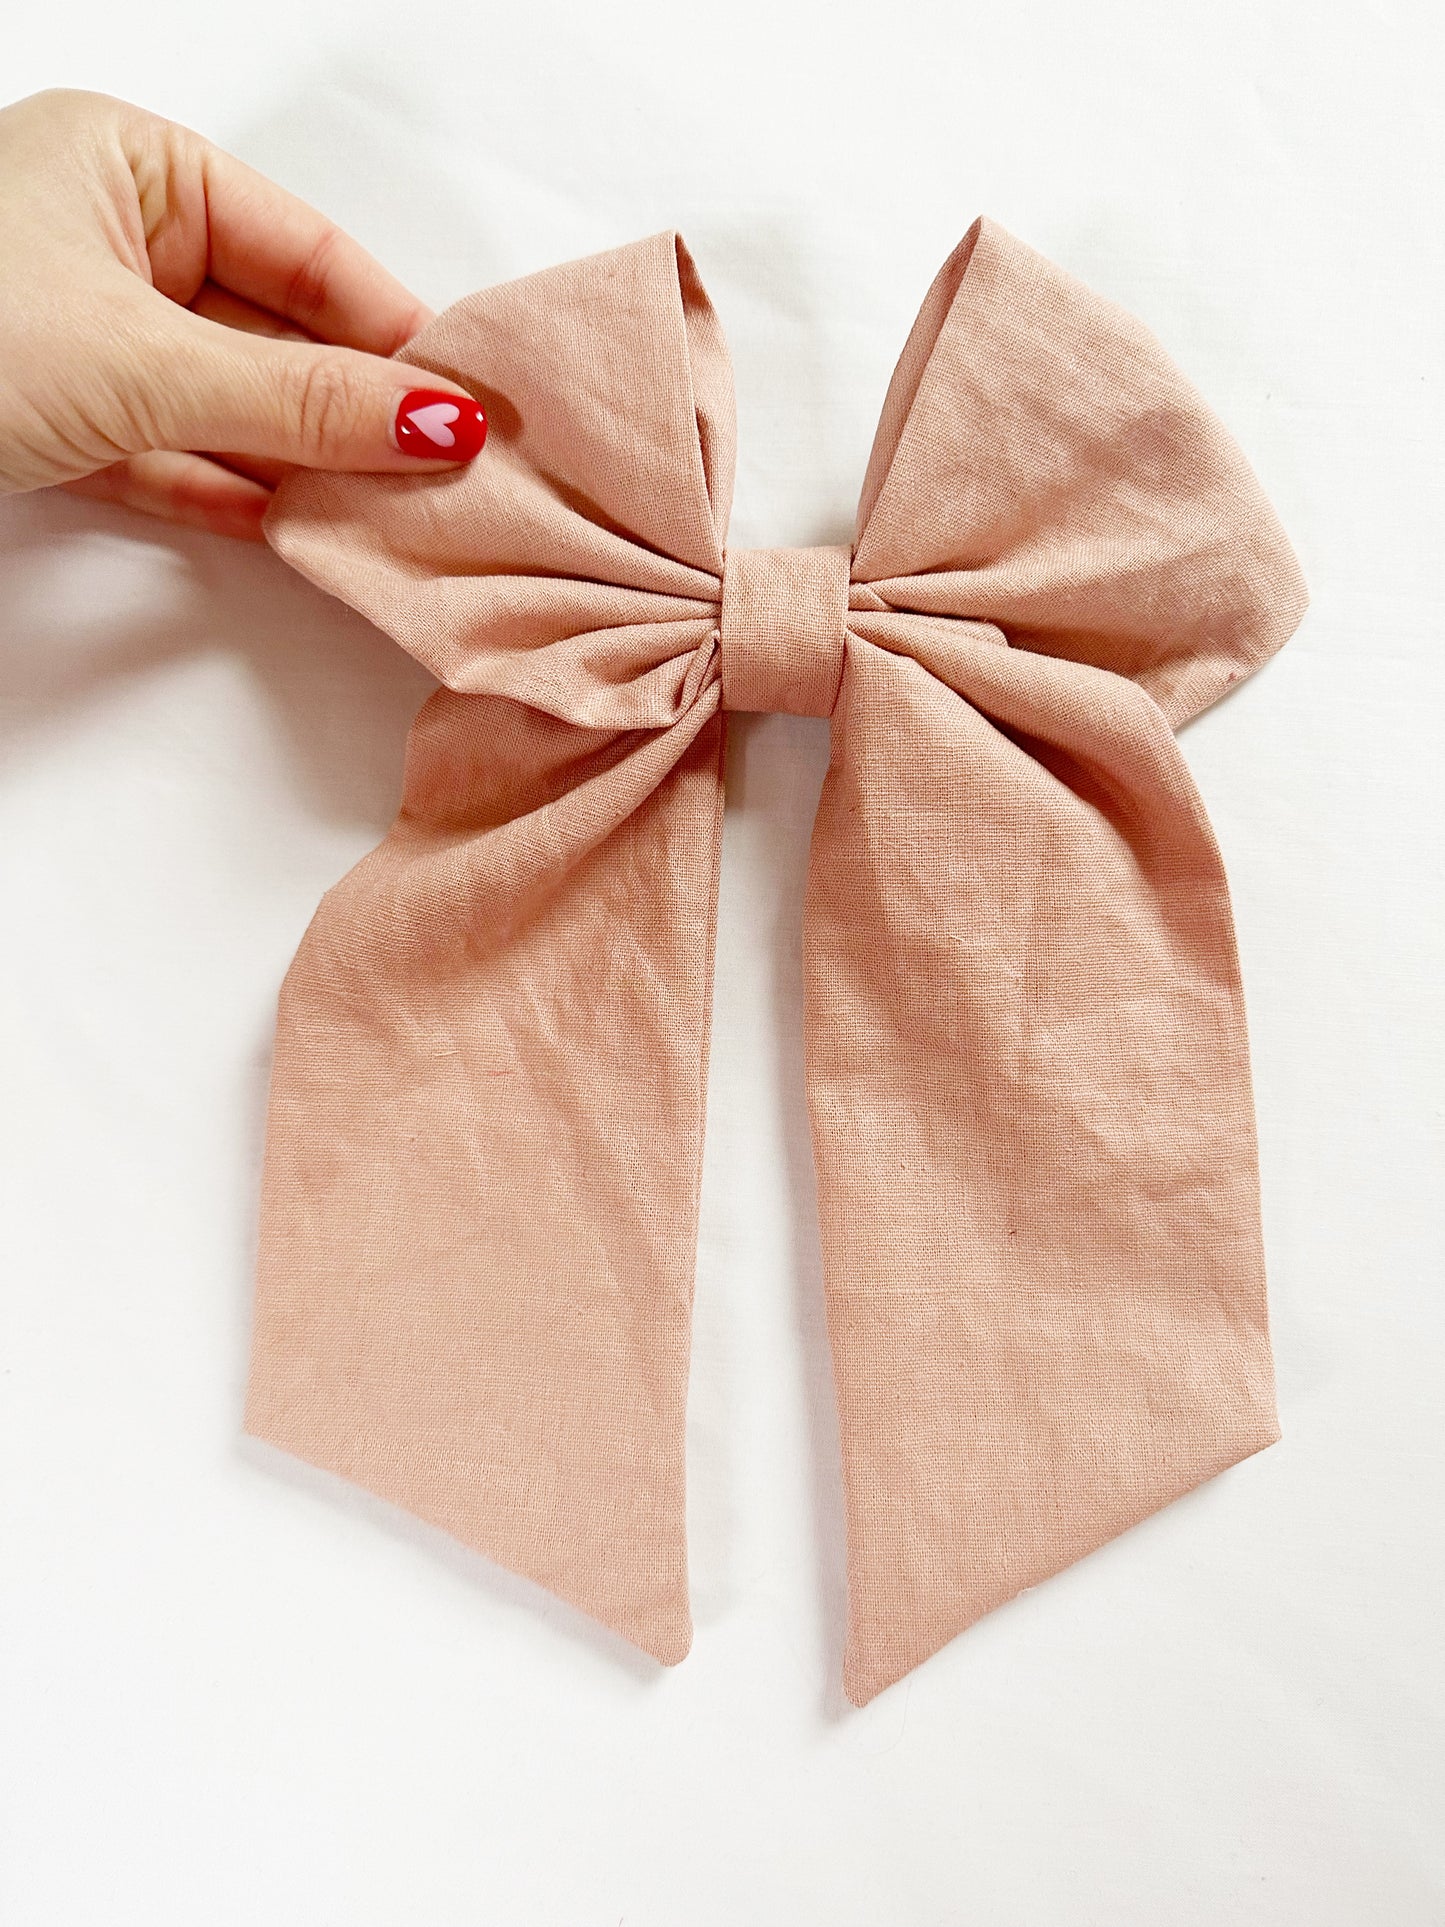 POWER Hair Bow in ballet pink linen